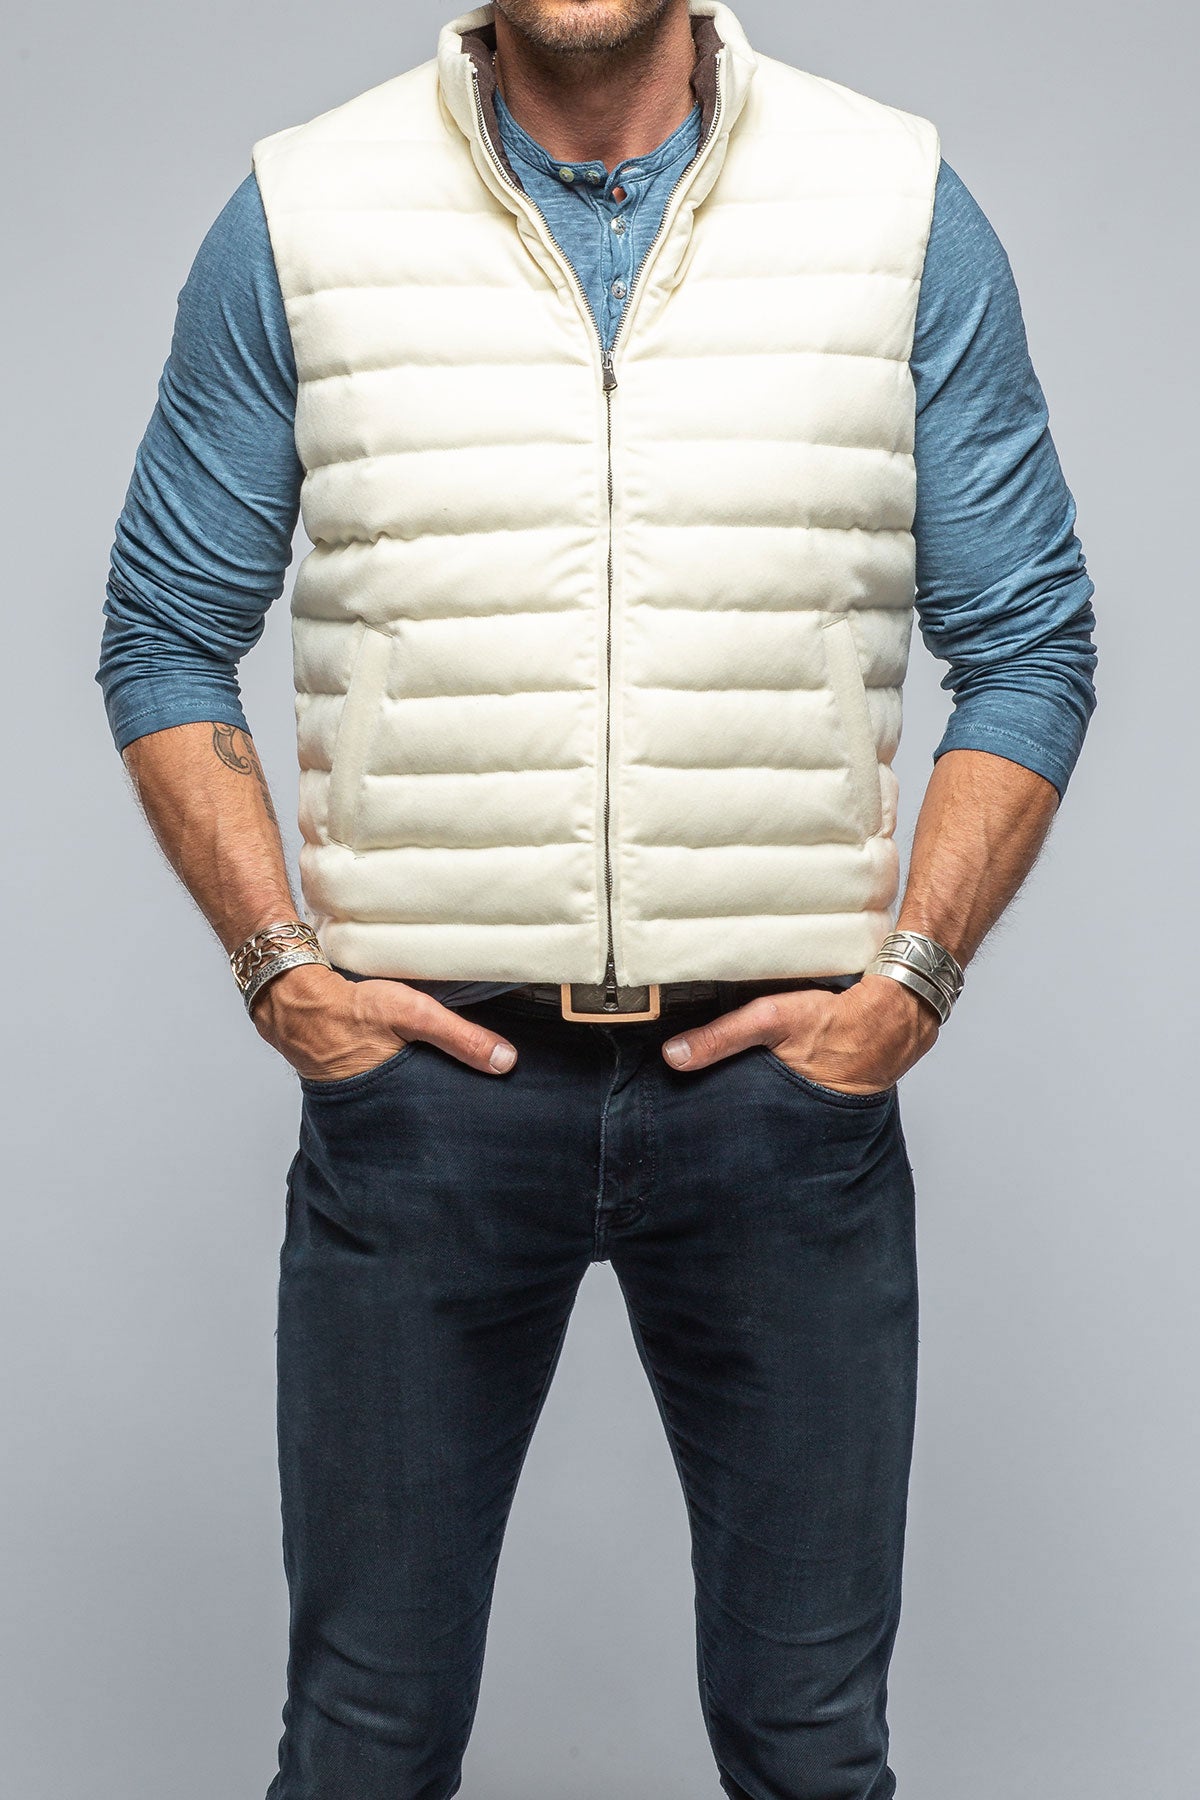 Men's Luxury Cashmere Sweaters | Axel's - under-500 - under-500